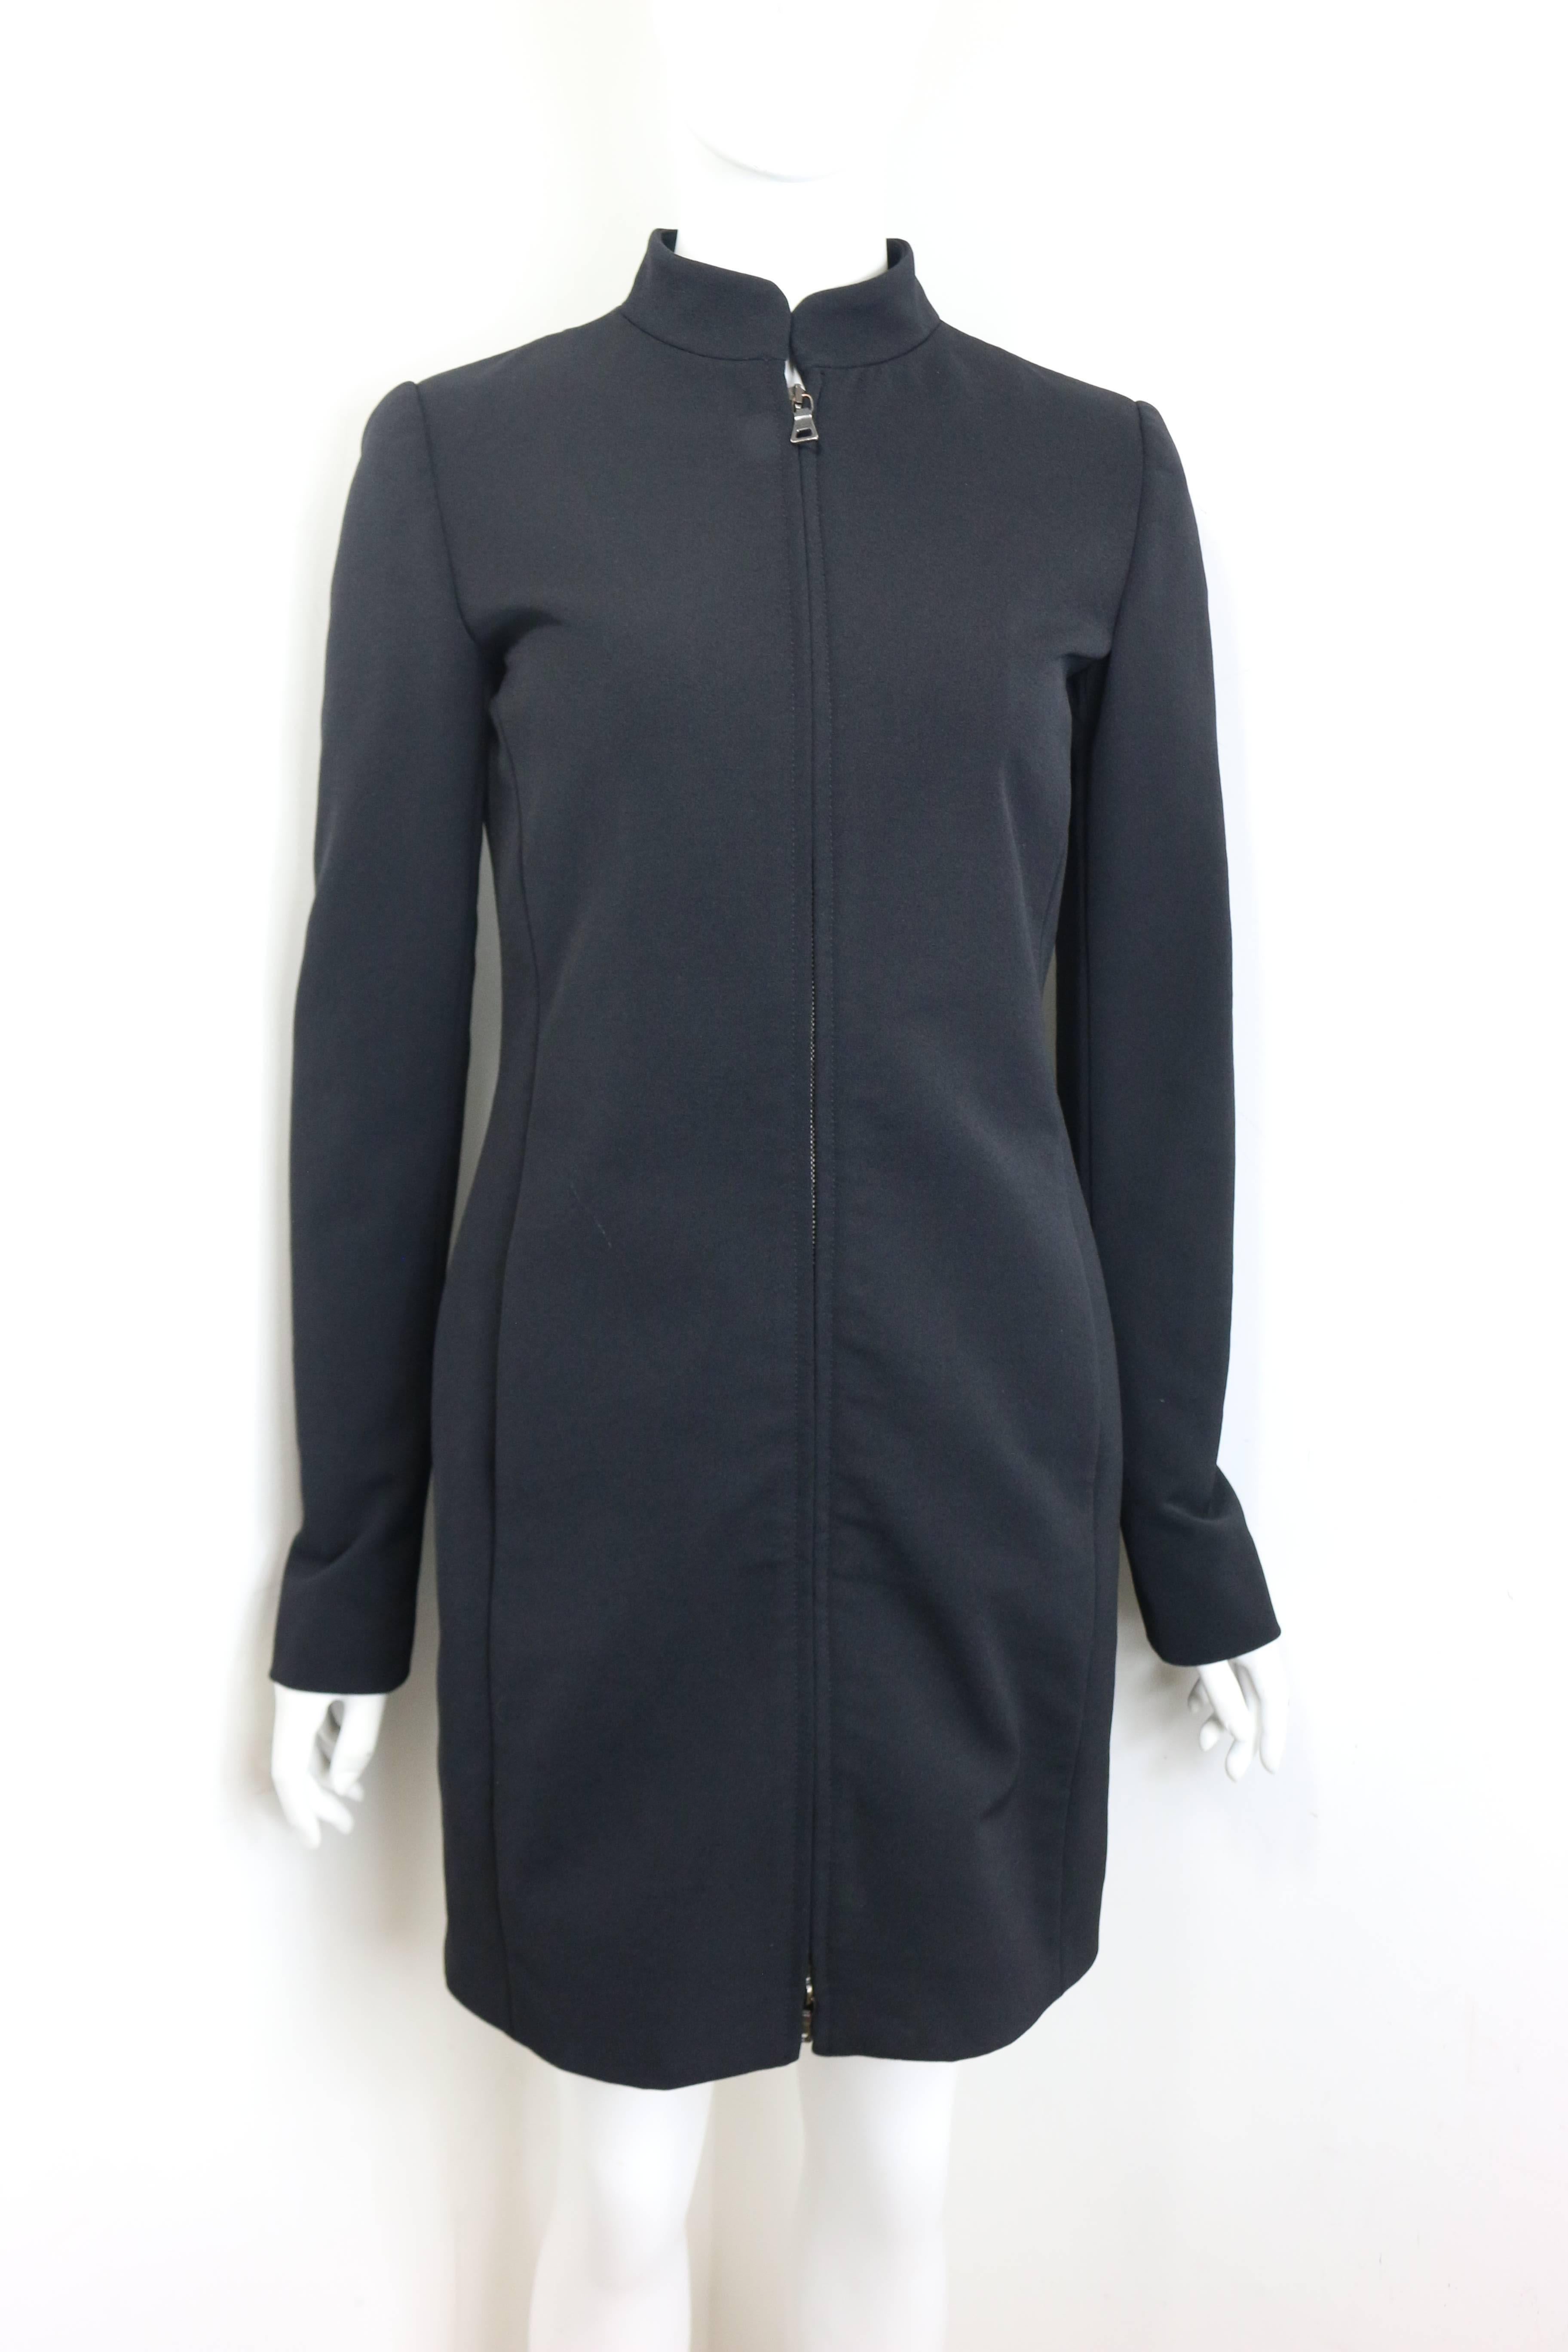 Women's Prada Black Nylon with Detachable Black Faux Fur Jacket  For Sale